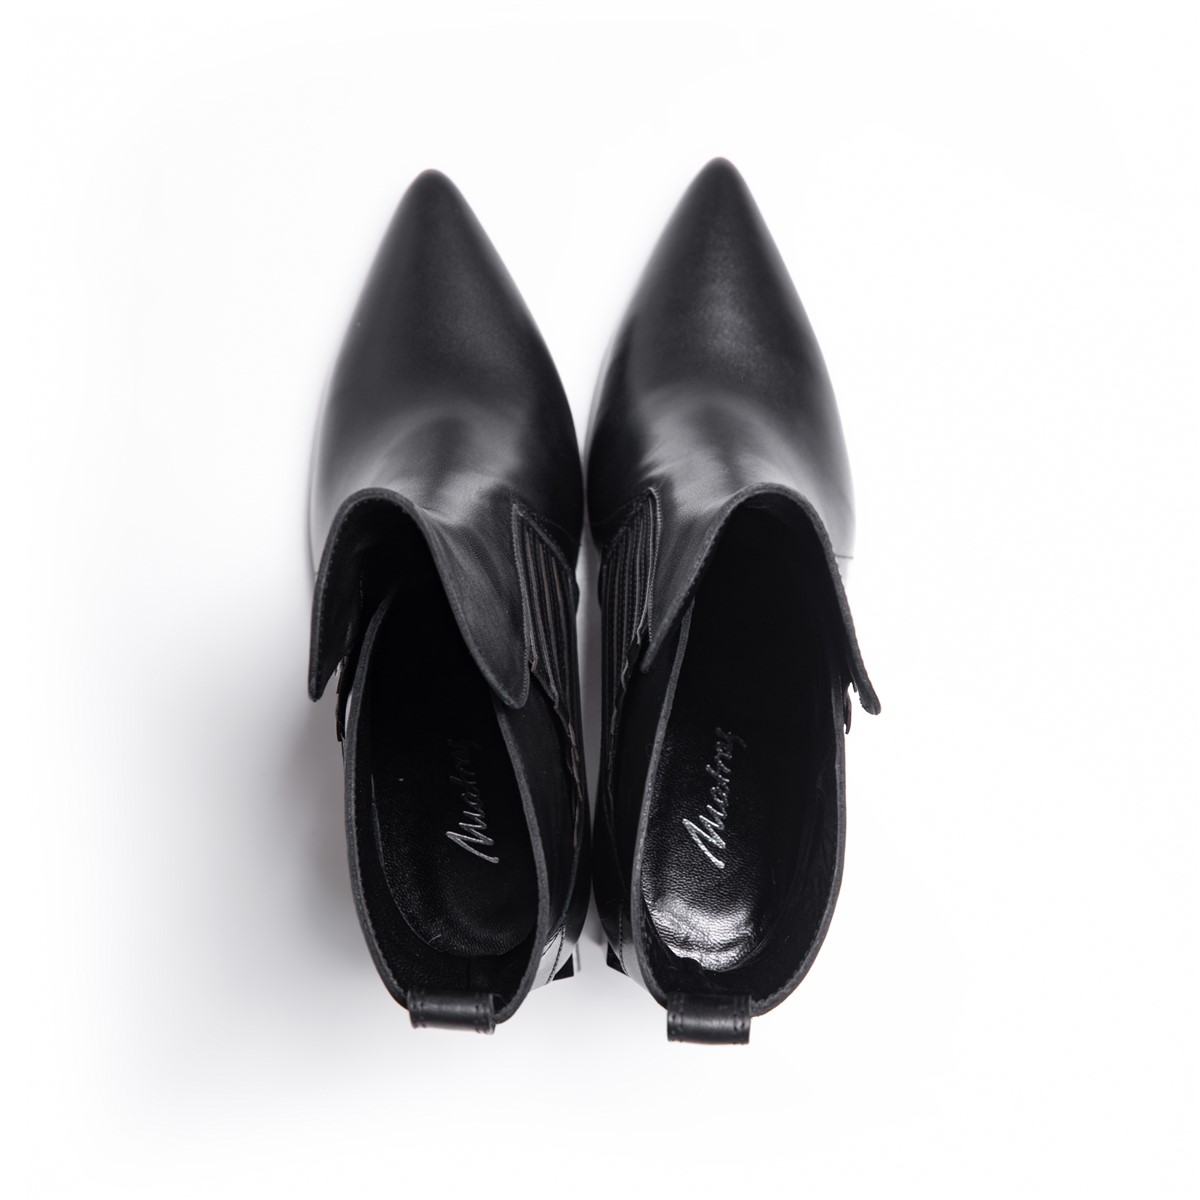 Matraş Deri Kadın Topuklu Bot  Siyah 9FF-1435